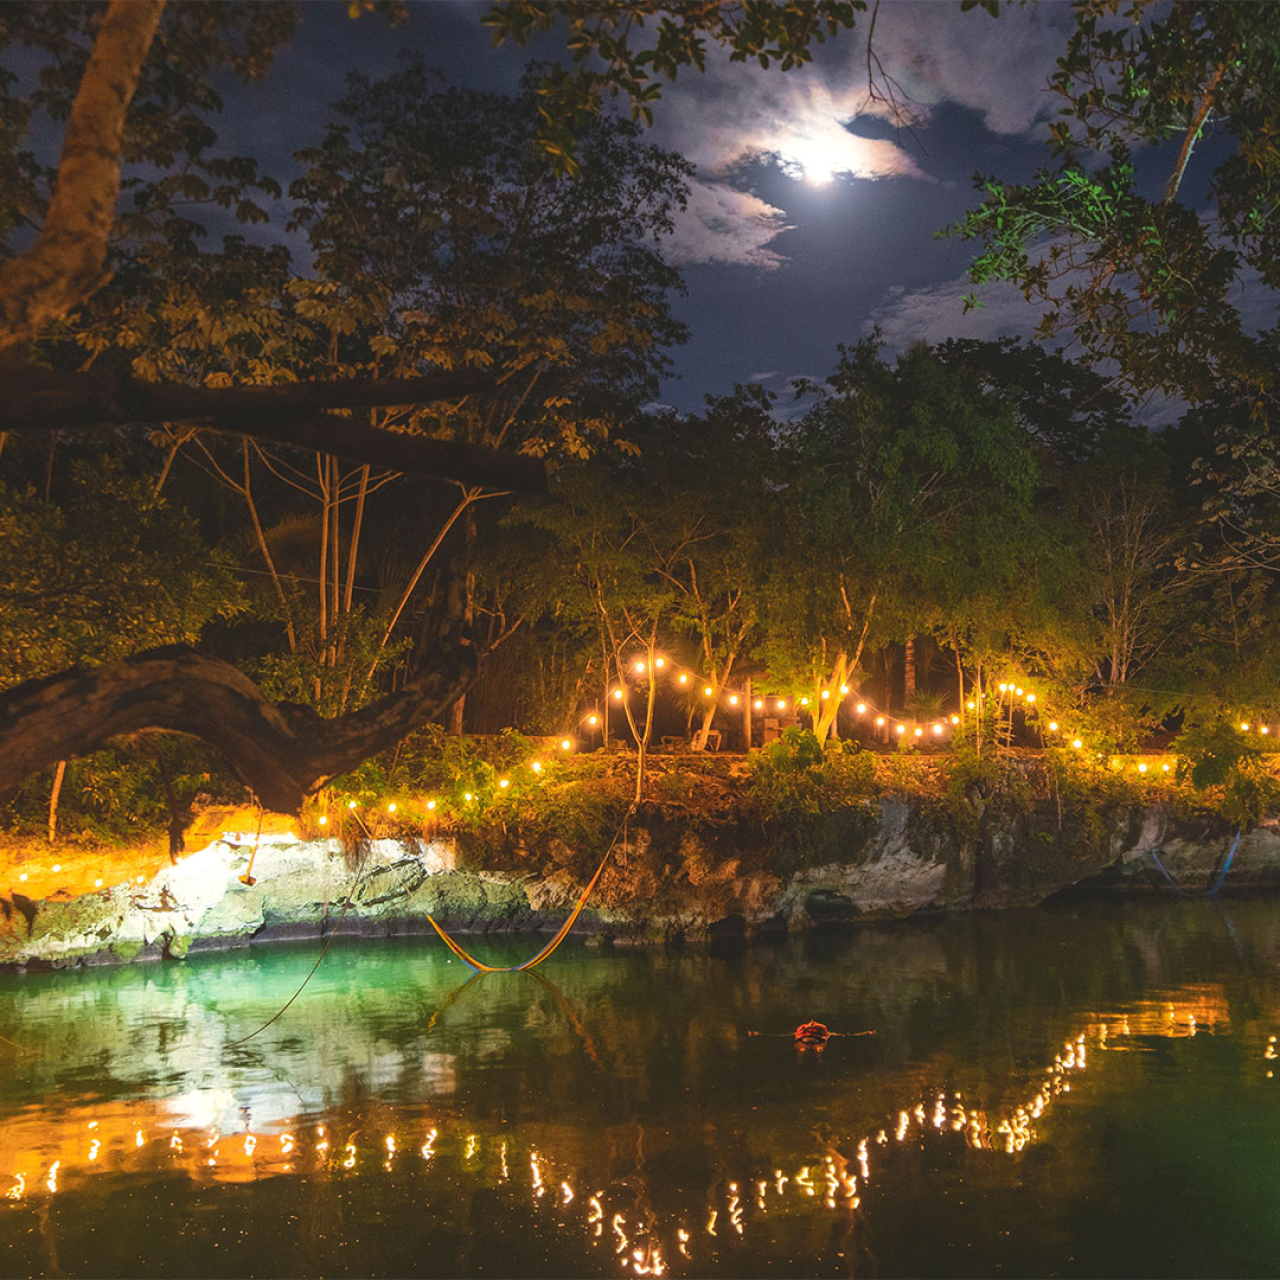 Cenote at night illuminated by lights